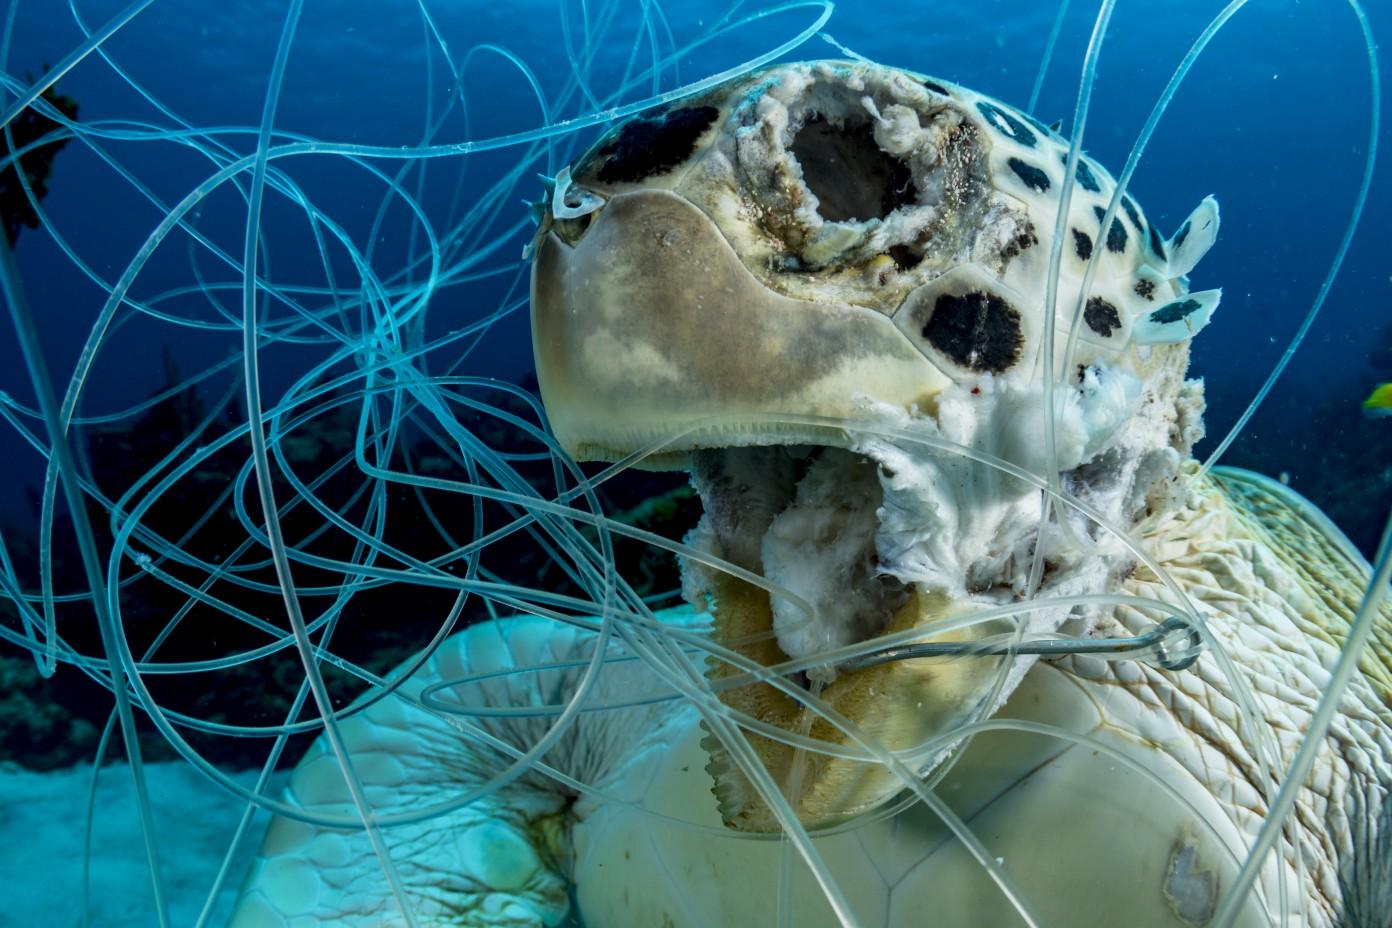 A turtle long dead trapped in fishing line in the Bahama, taken by Shane Gross